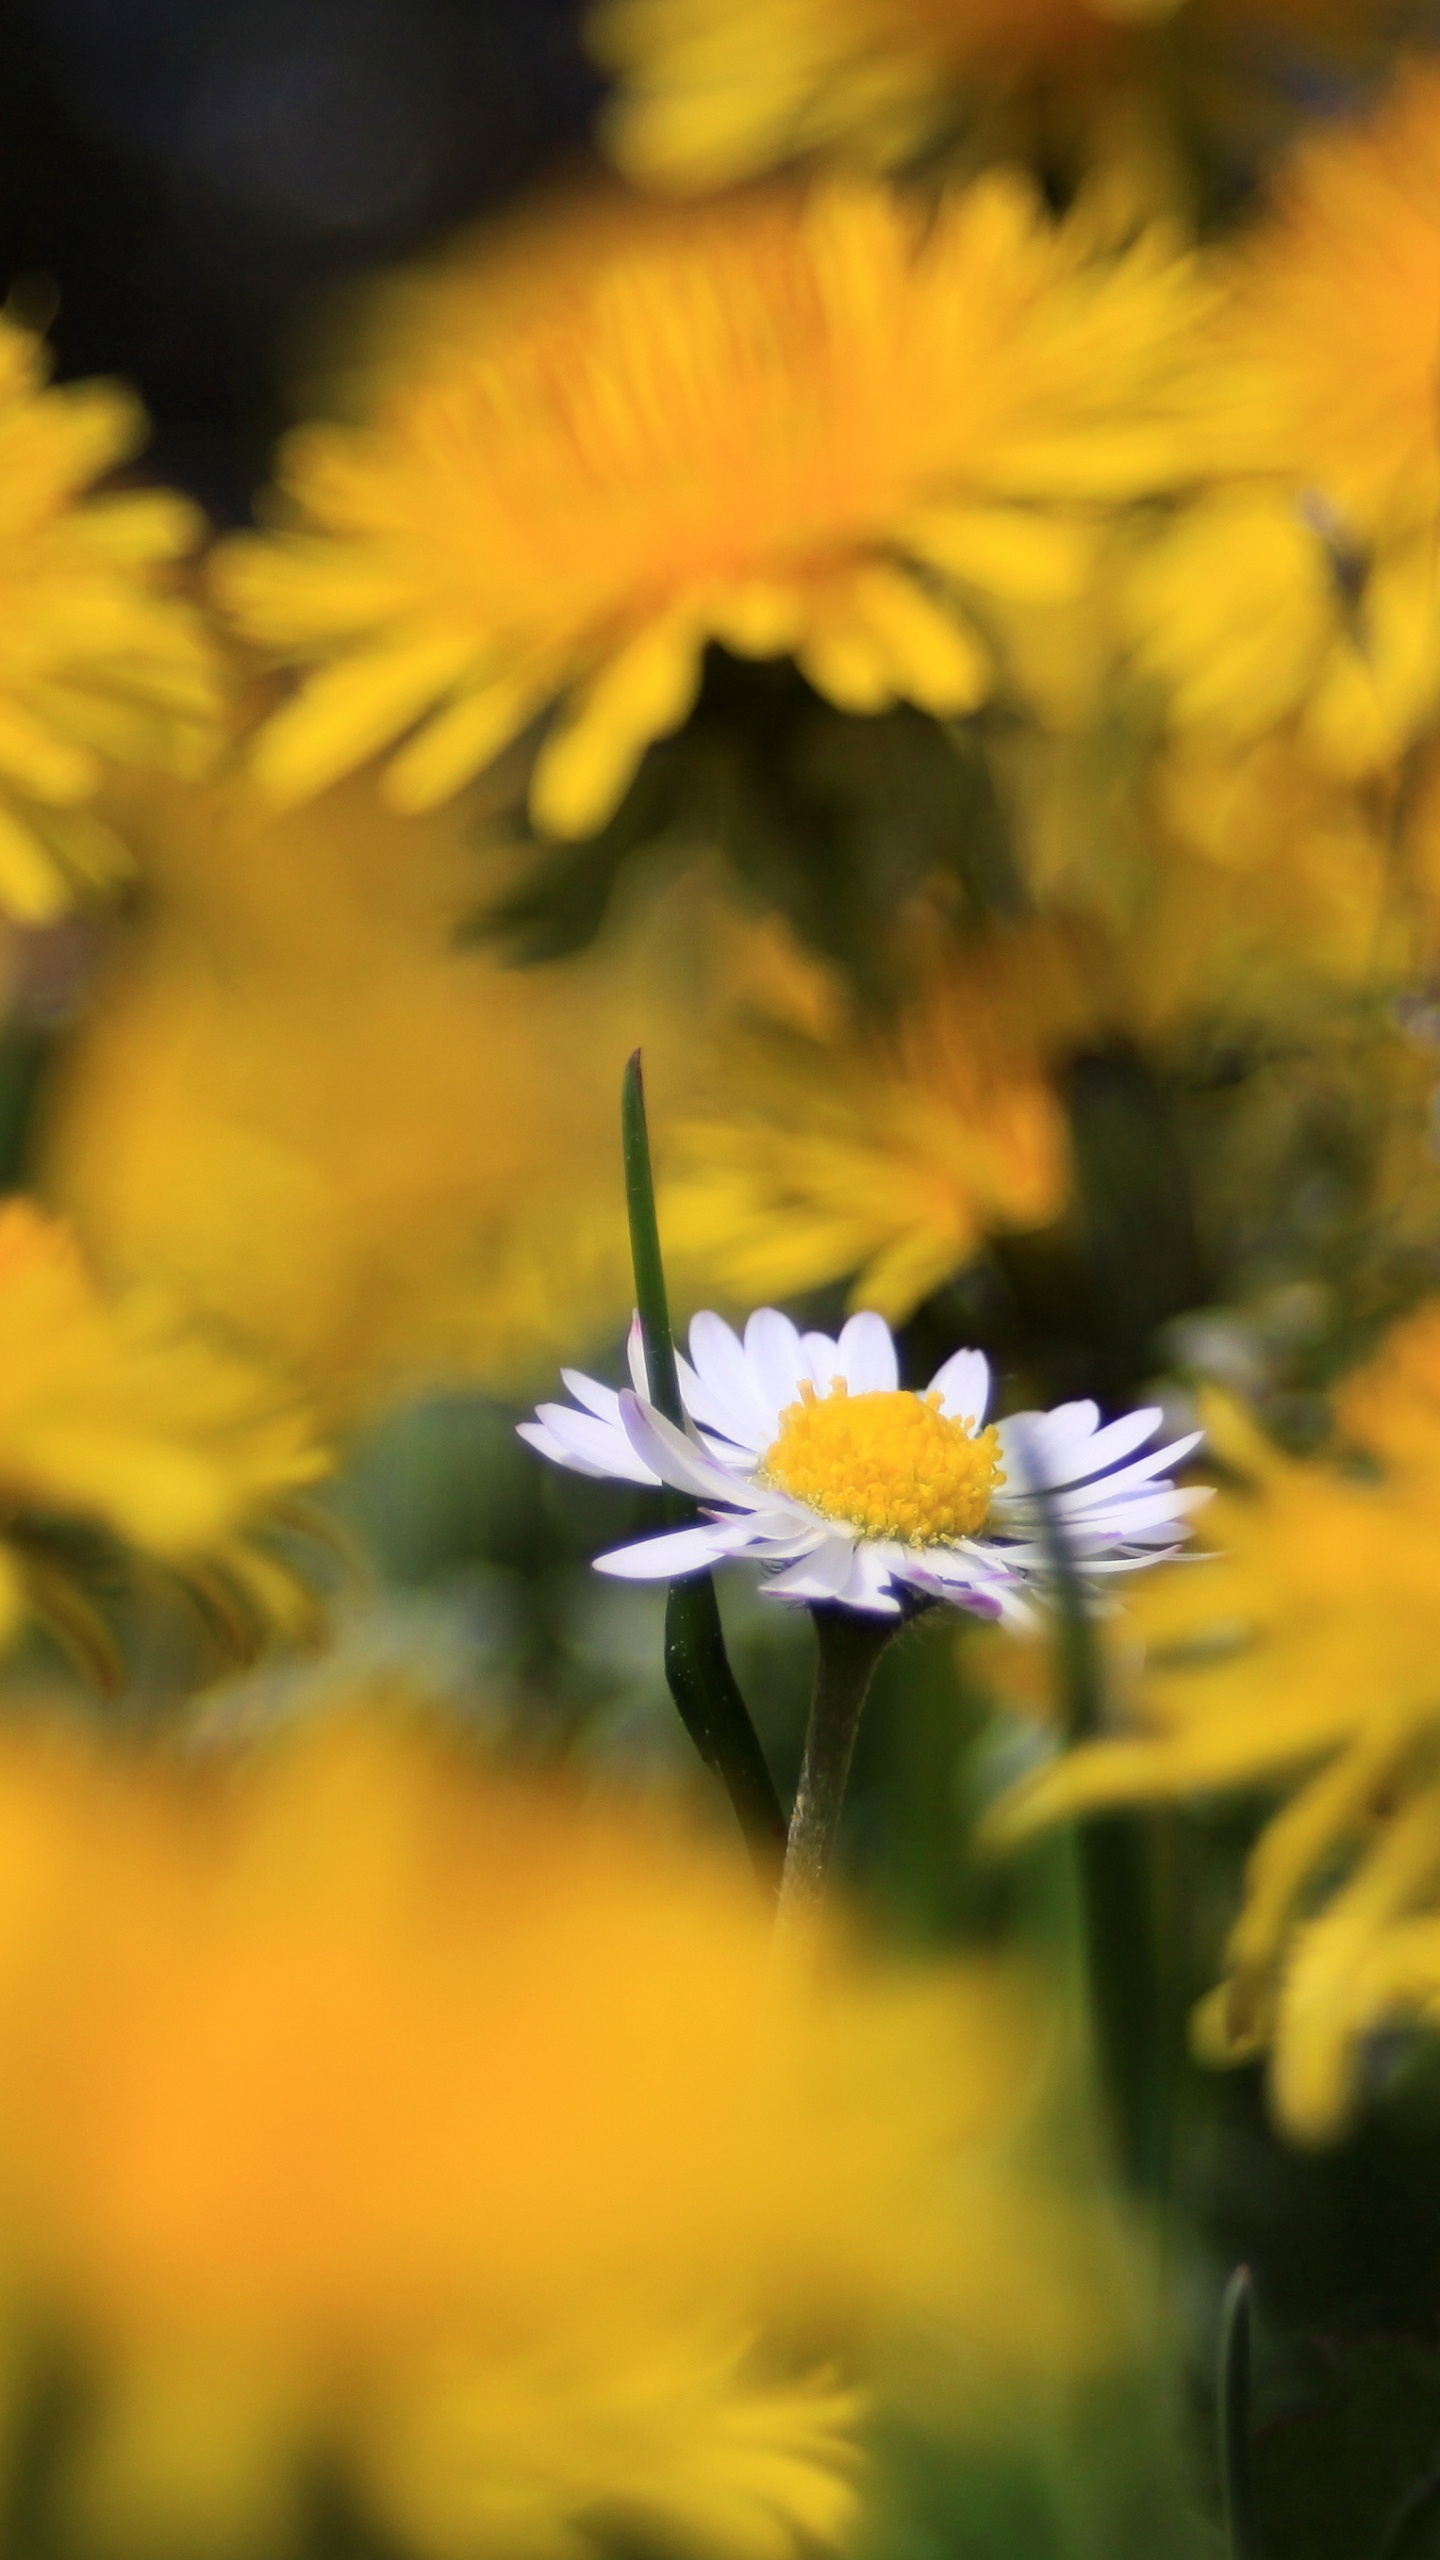 Yellow and White Flowers in Tilt Shift Lens. Wallpaper in 1440x2560 Resolution